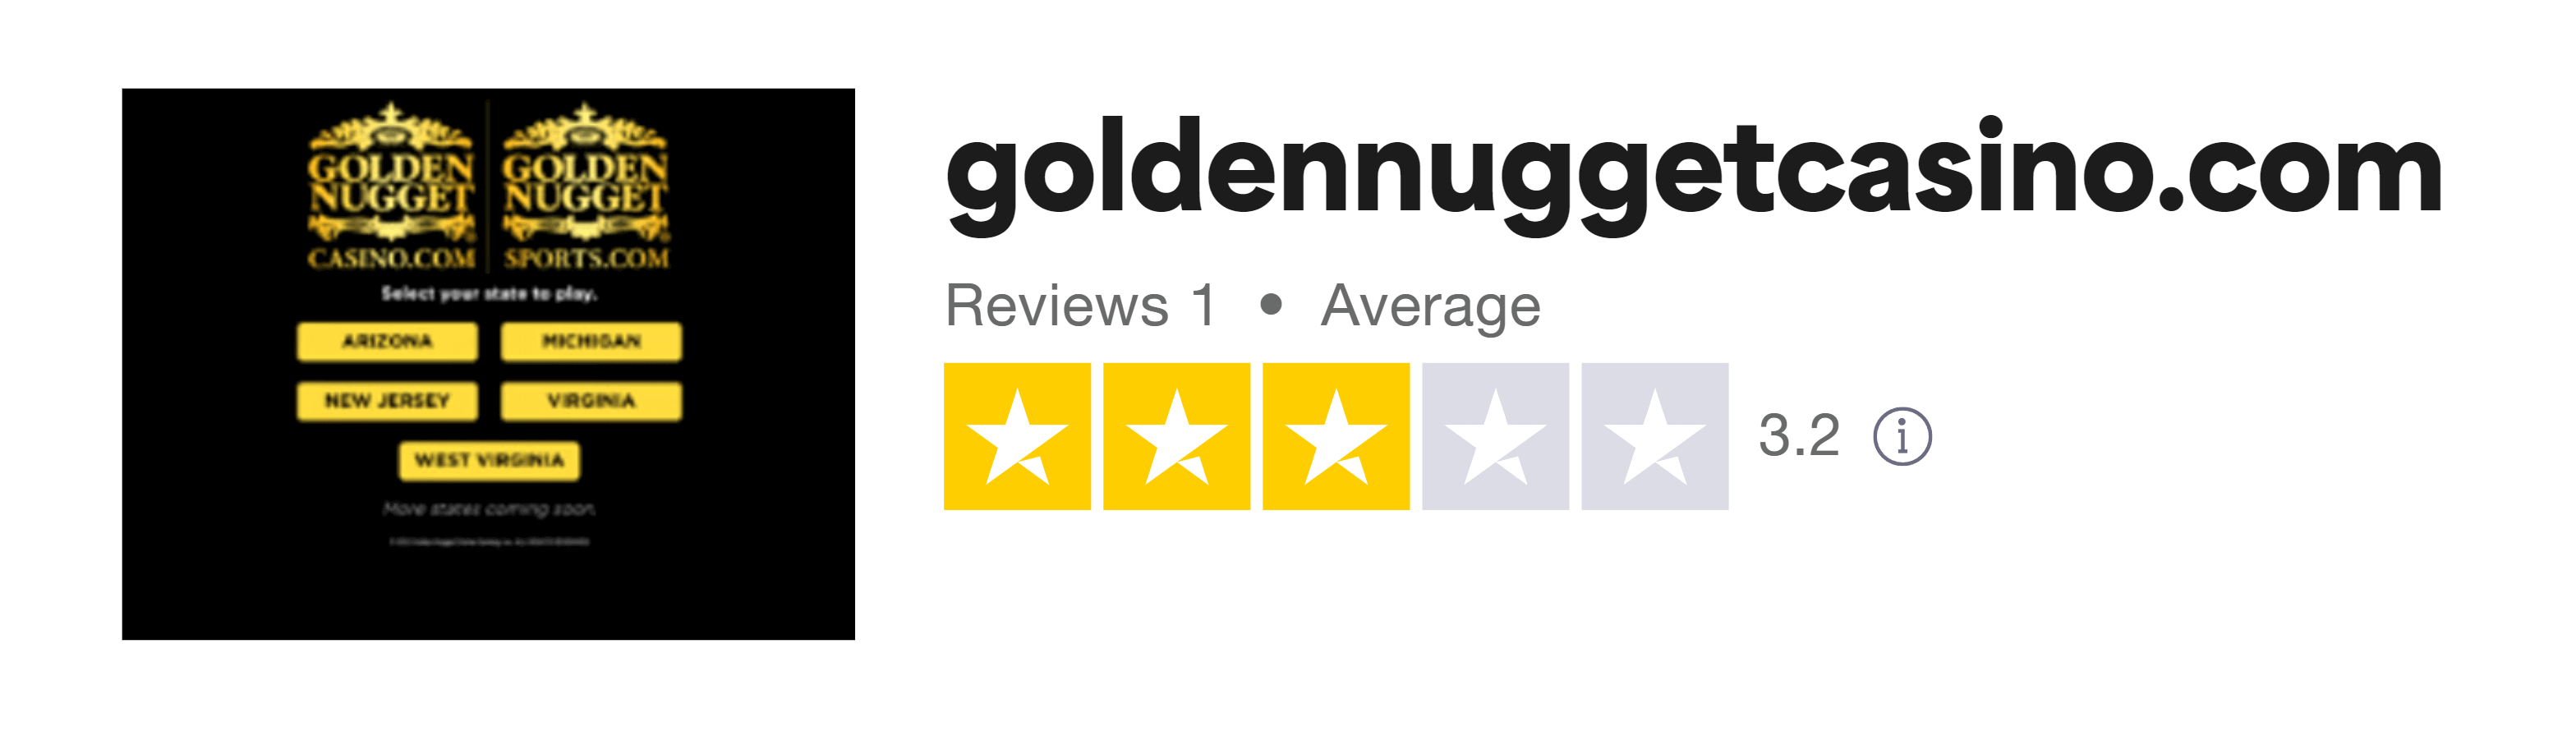 Trustpilot rating screenshot for the Golden Nugget WV